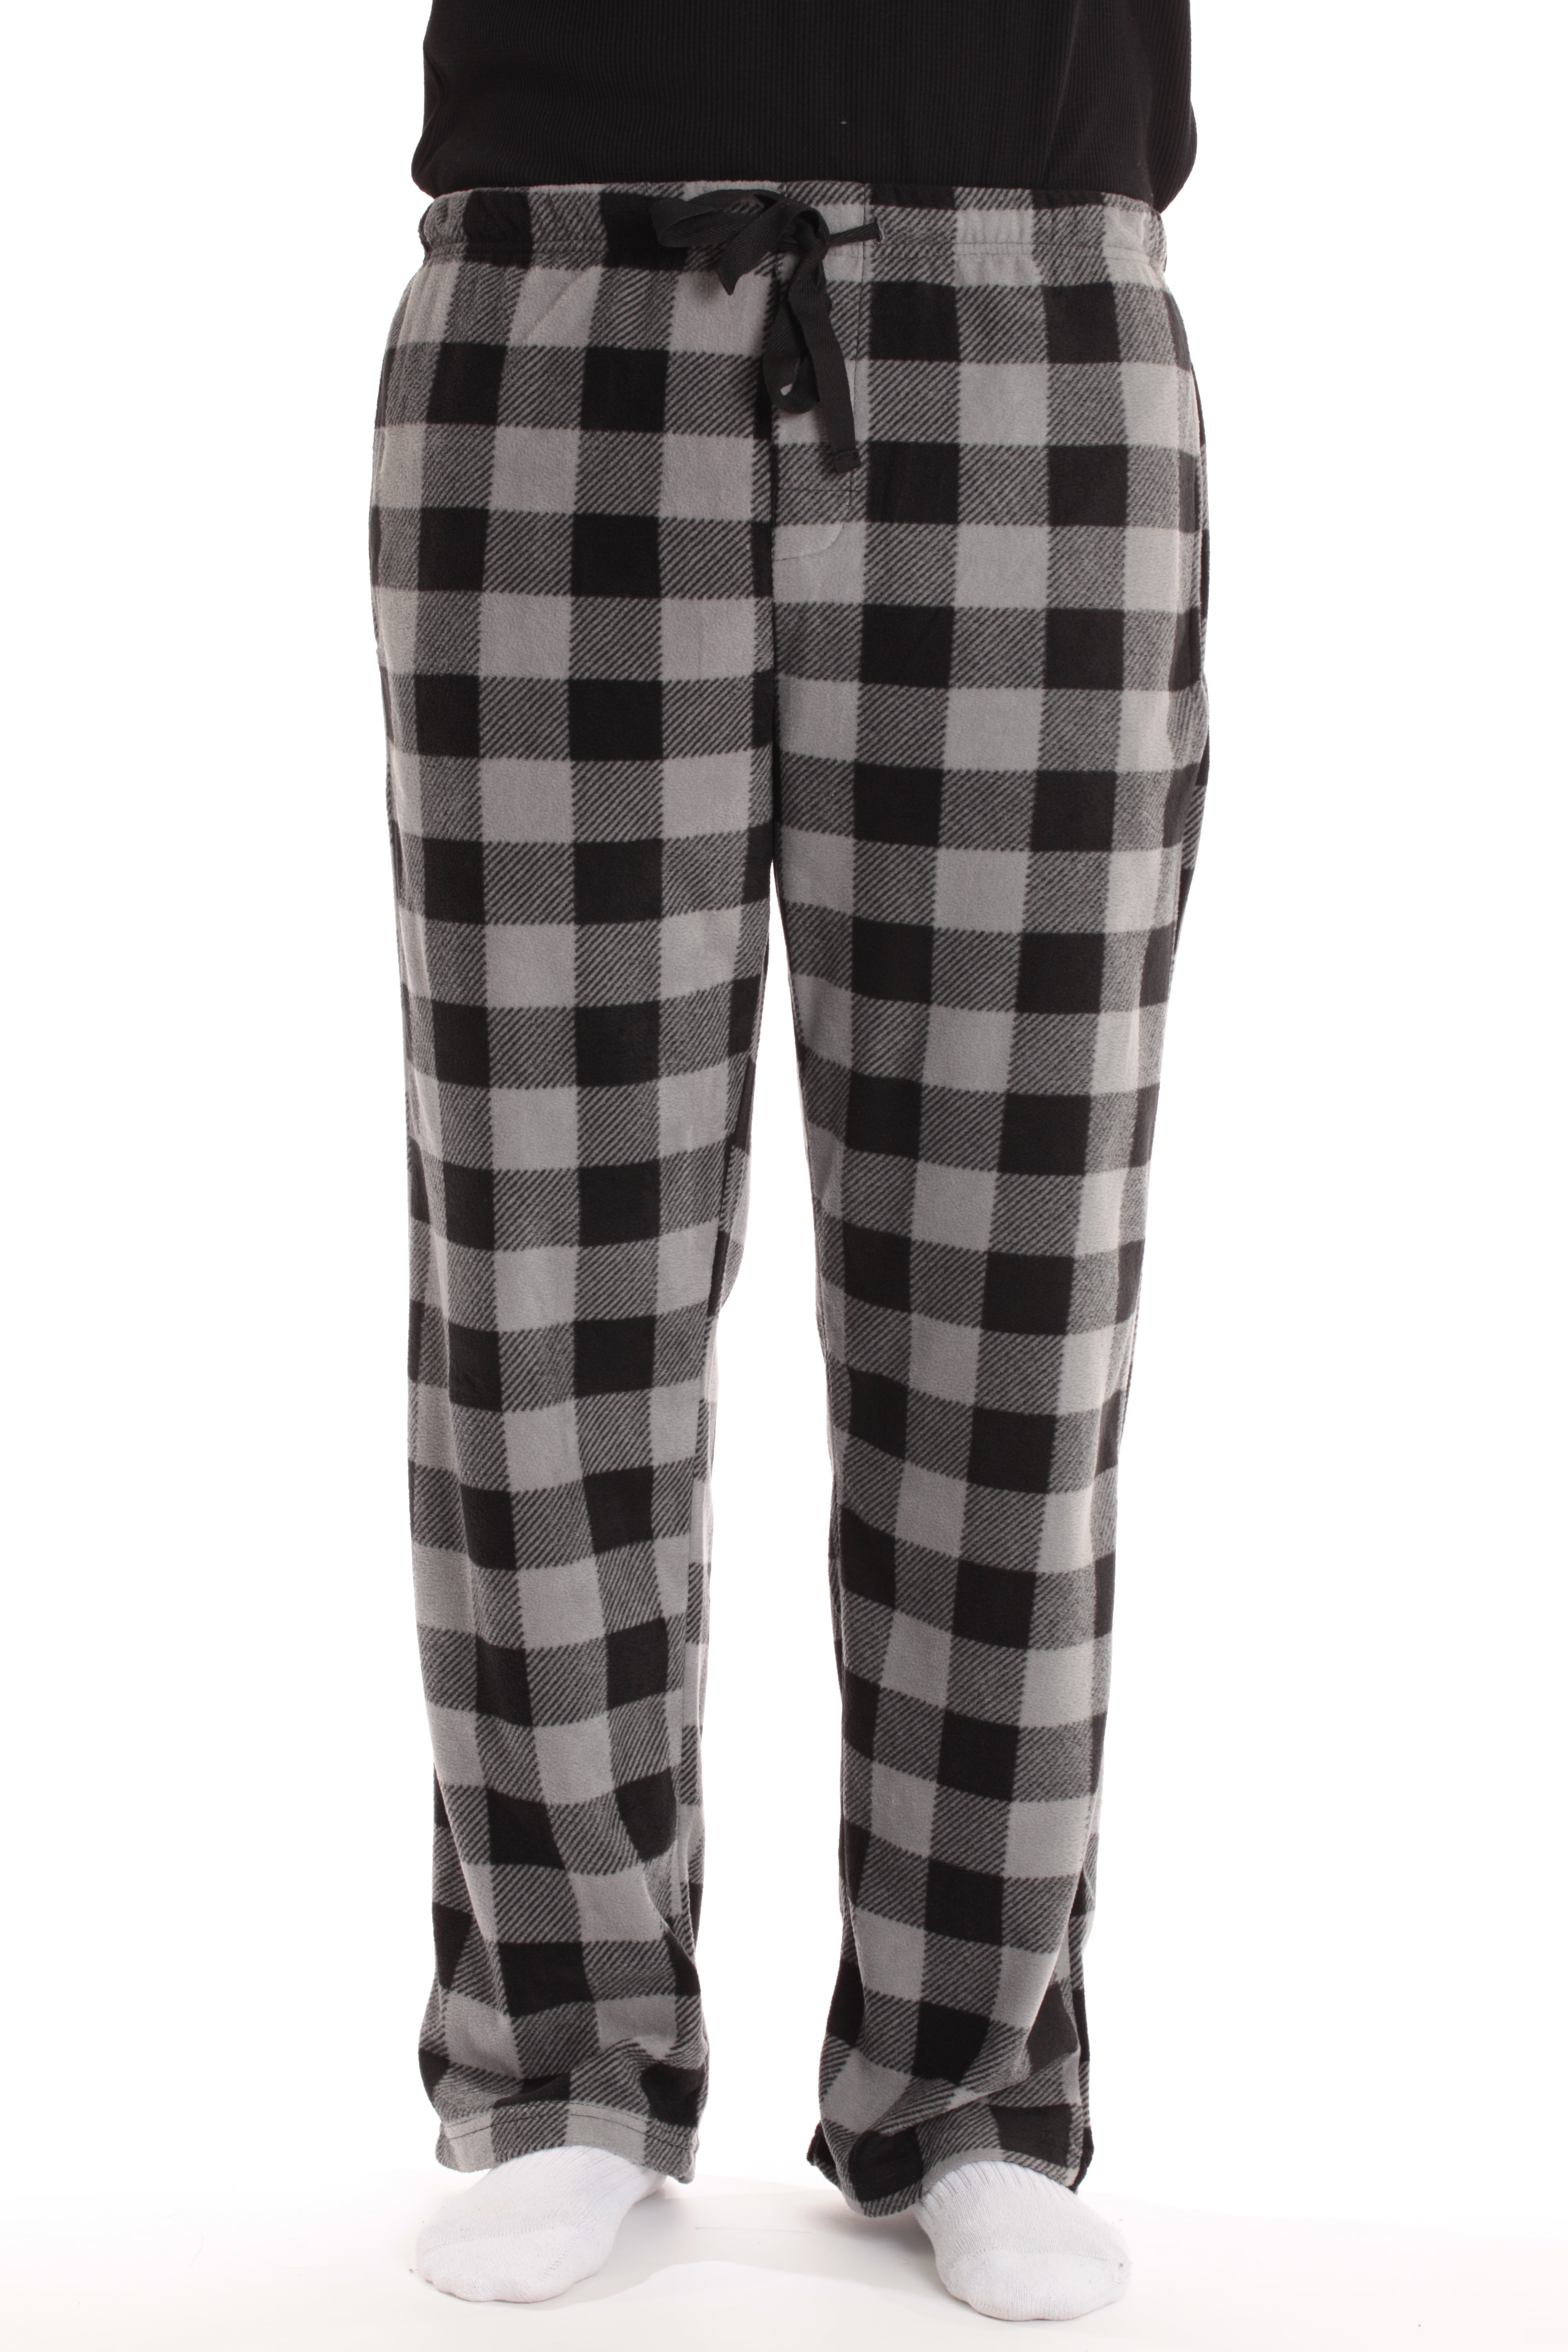 followme Microfleece Men's Buffalo Plaid Pajama Pants with Pockets (Black &  White Plaid, Small) 